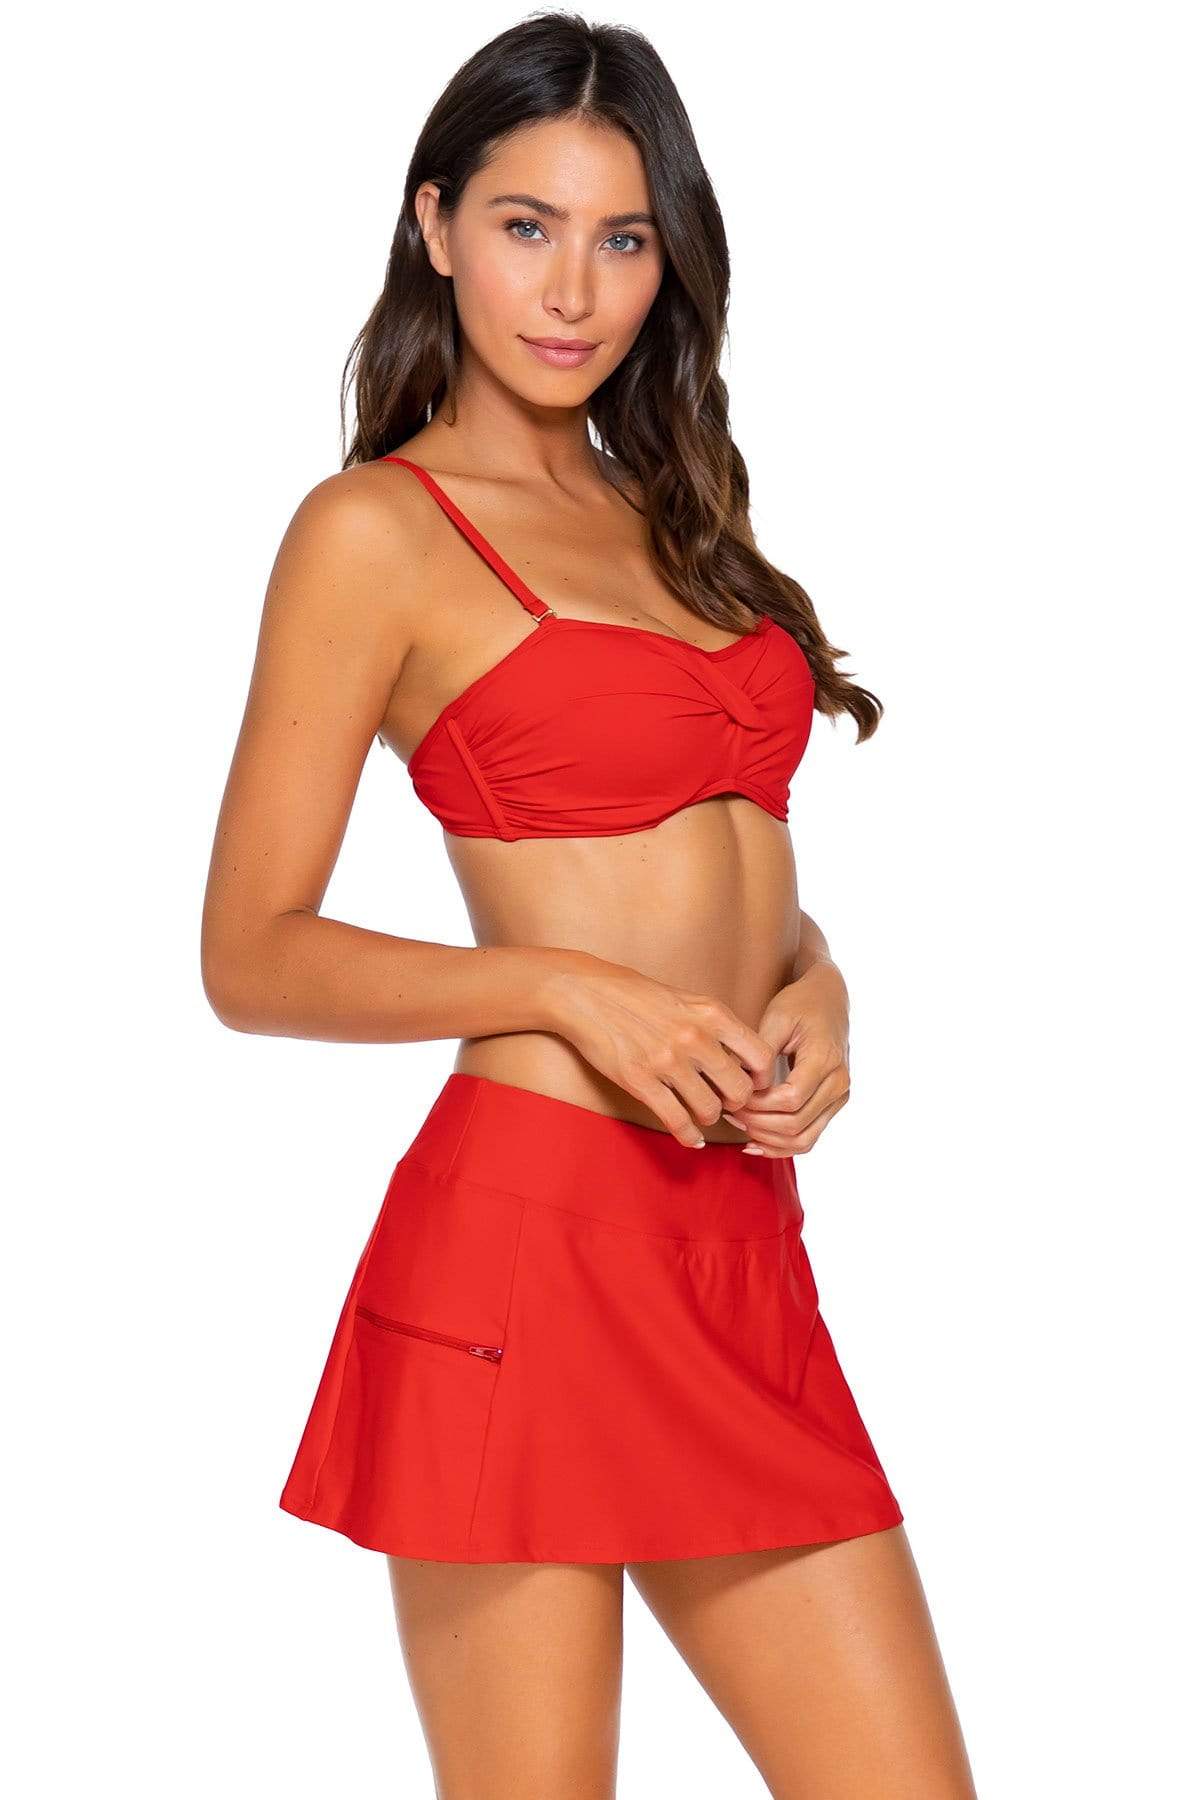 Bestswimwear -  Sunsets Scarlet Sporty Swim Skirt